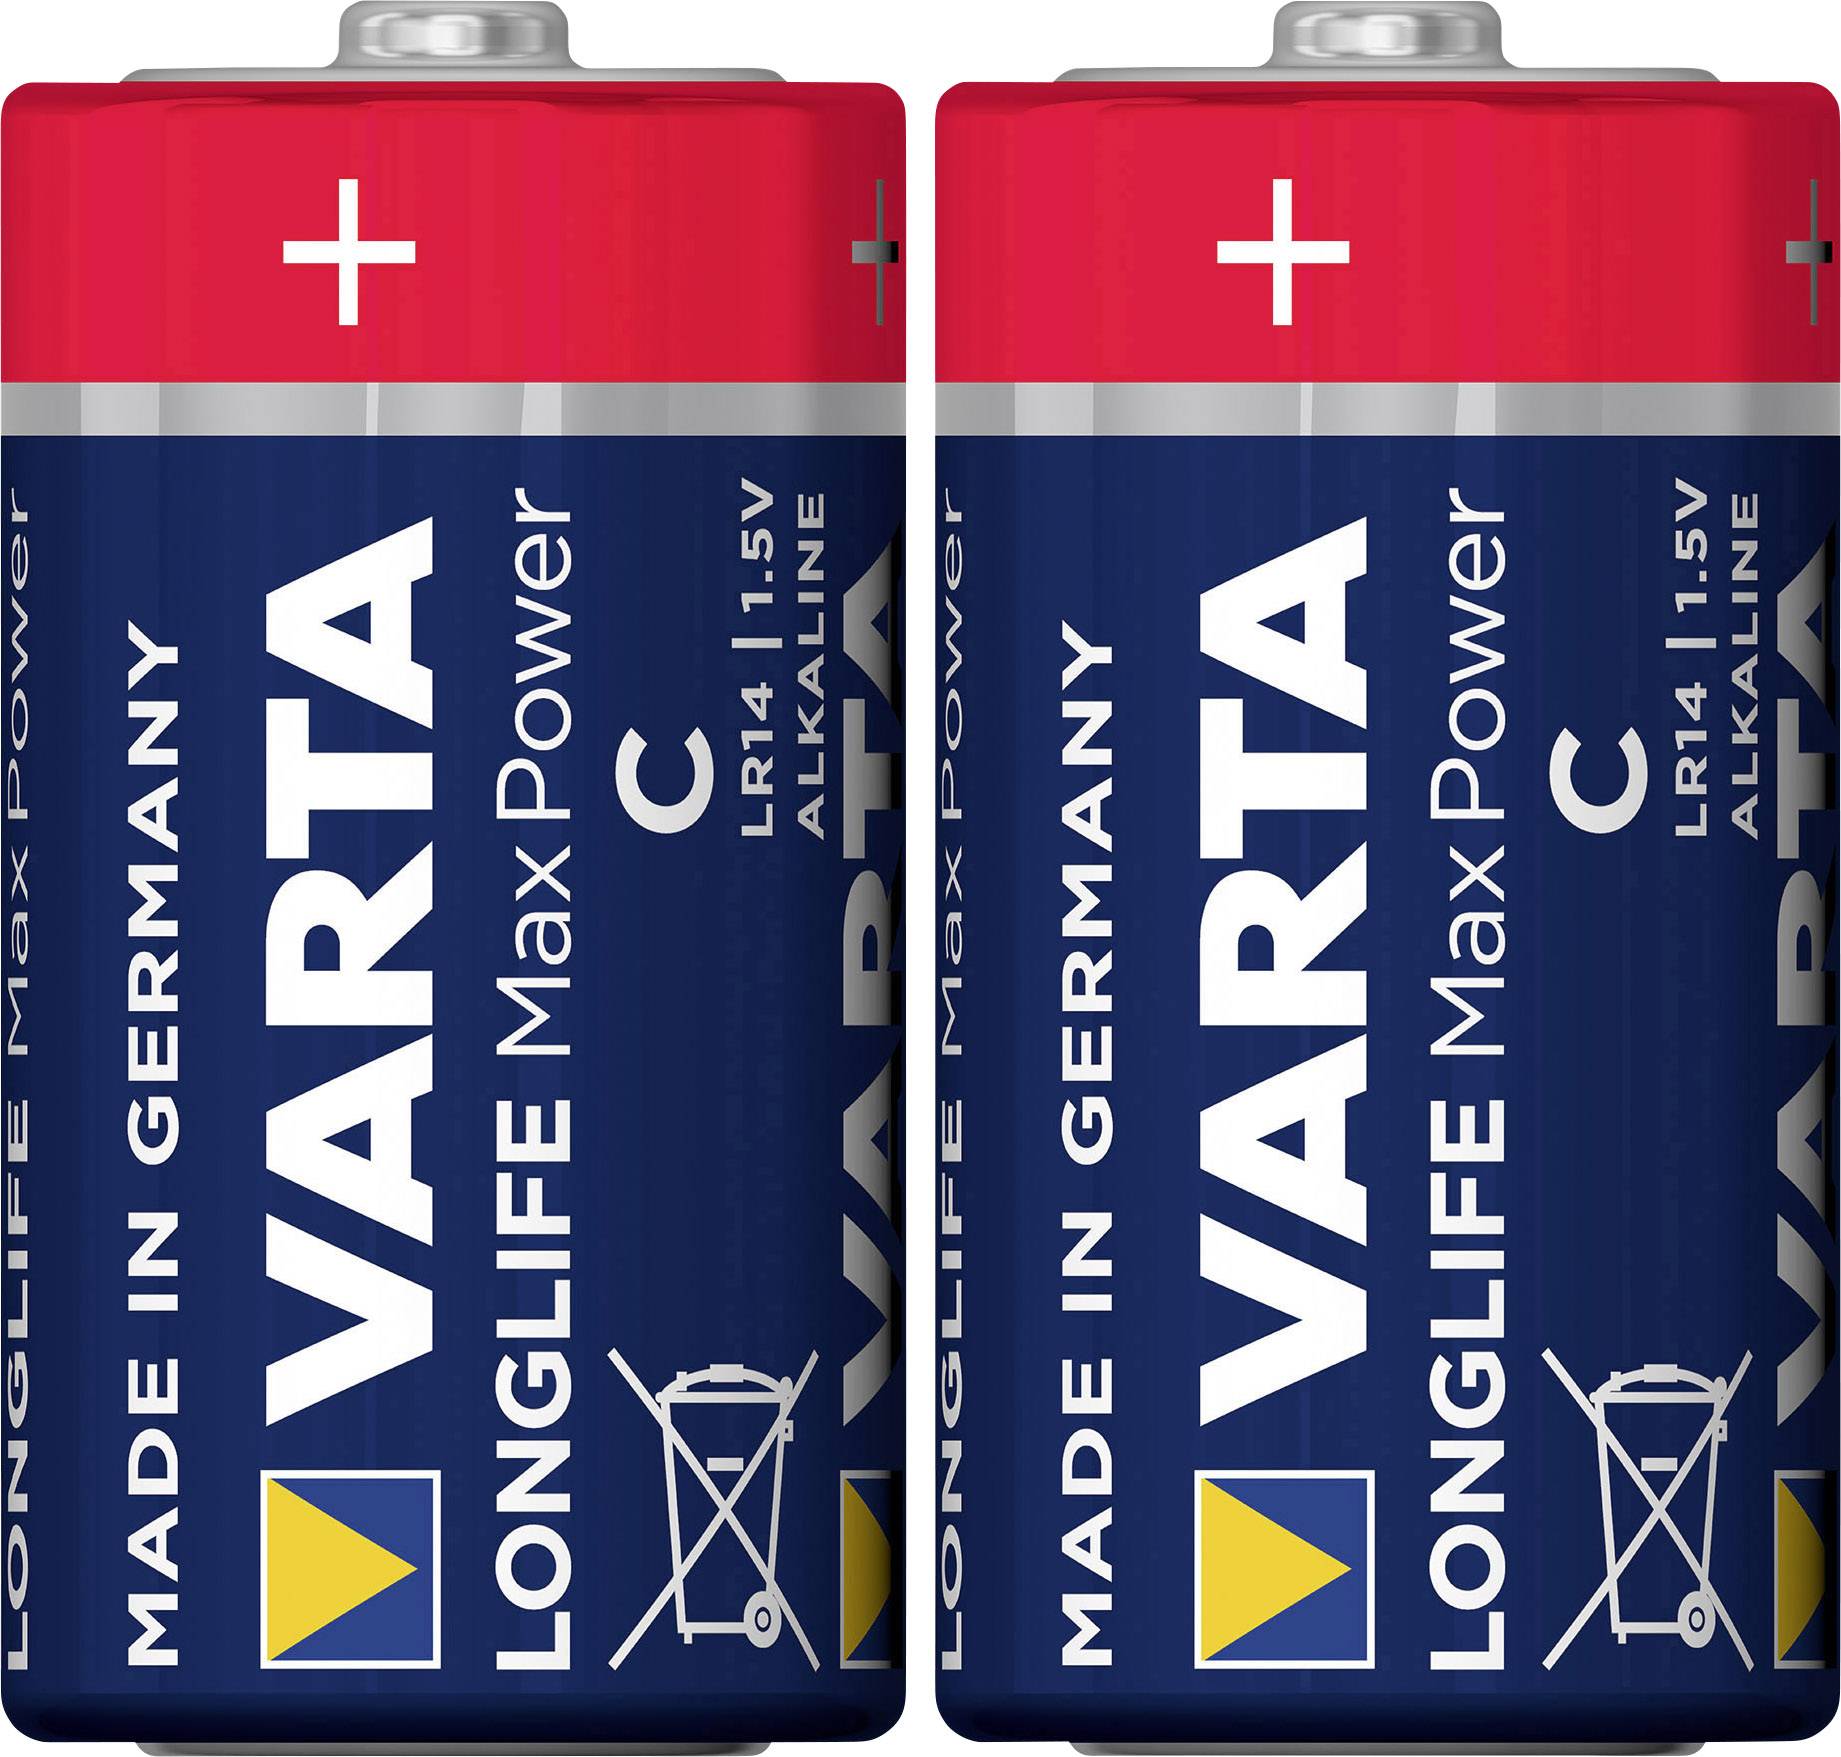 Baterie malé mono C alkalicko-manganová Varta Longlife Max Power LR14 7800 mAh 1.5 V 2 ks